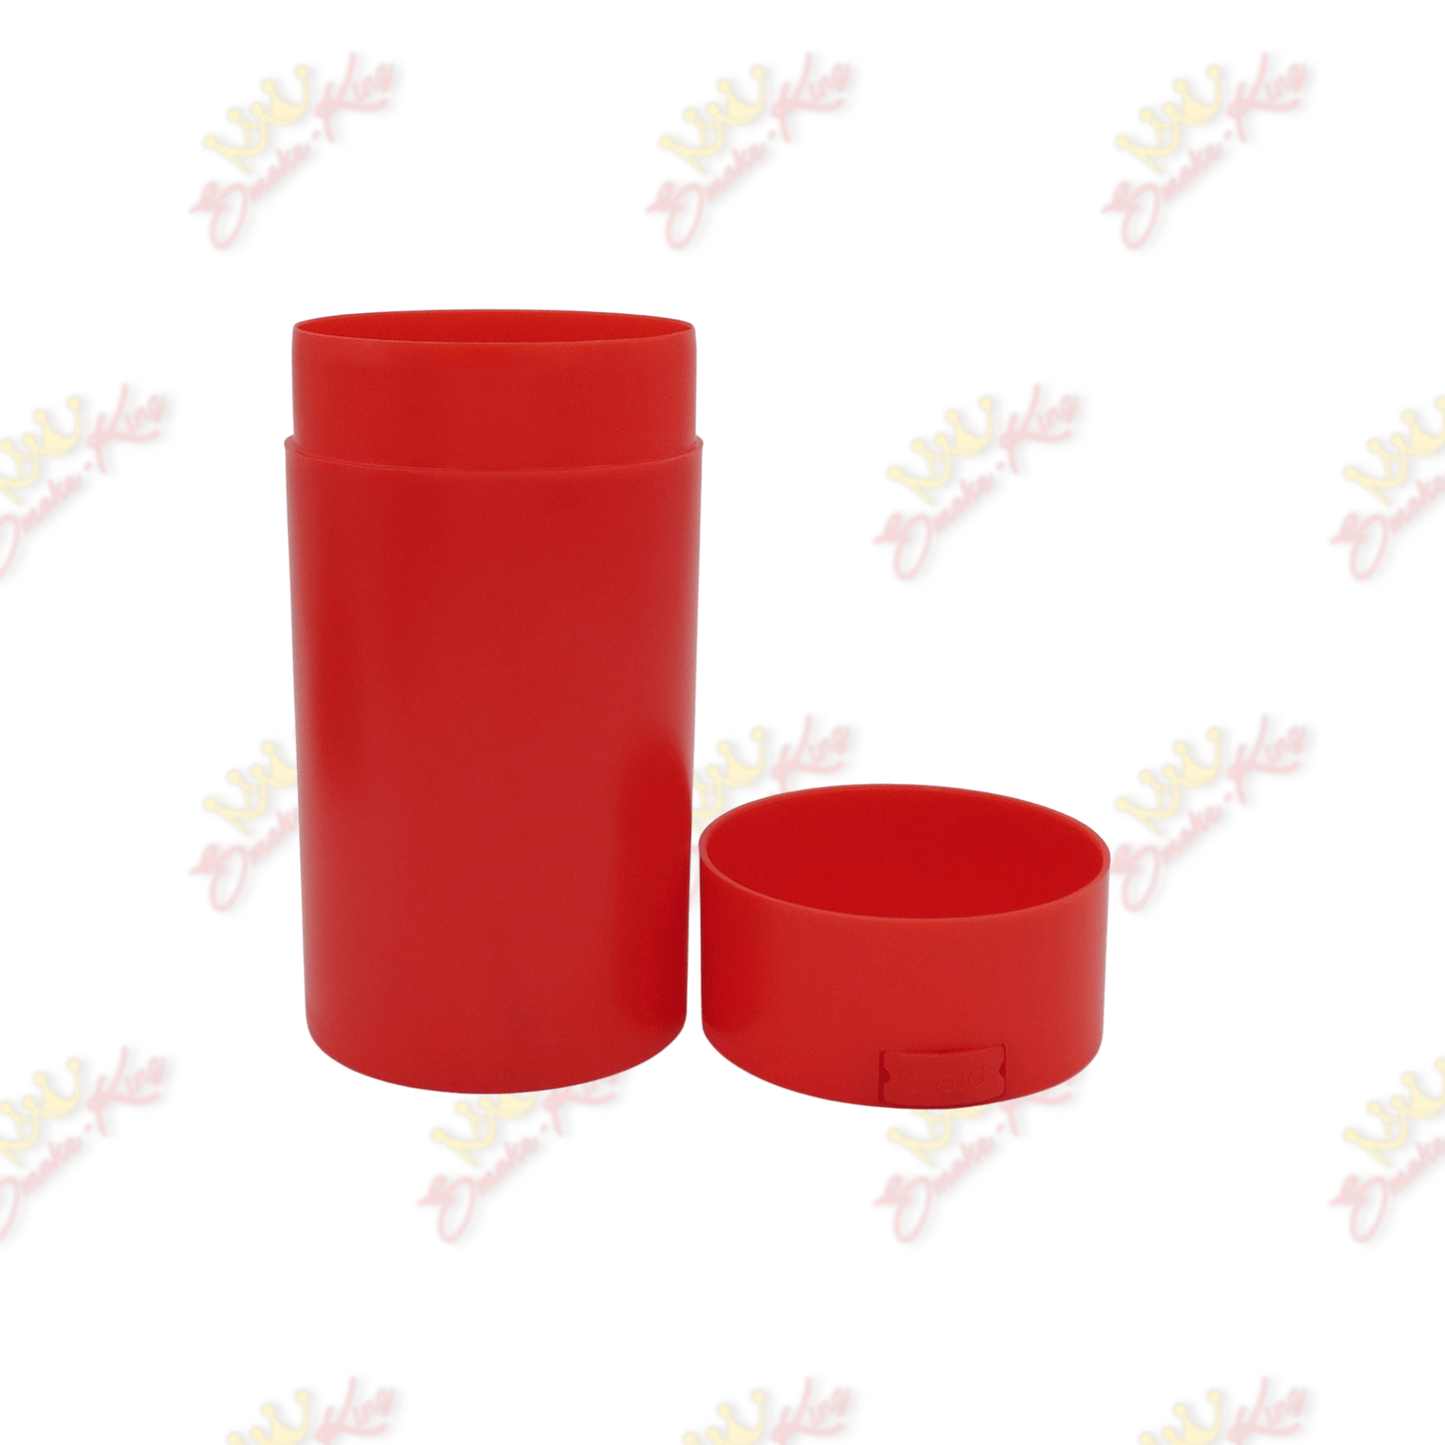 Smokeking Storage jars Red Vacuum Jar